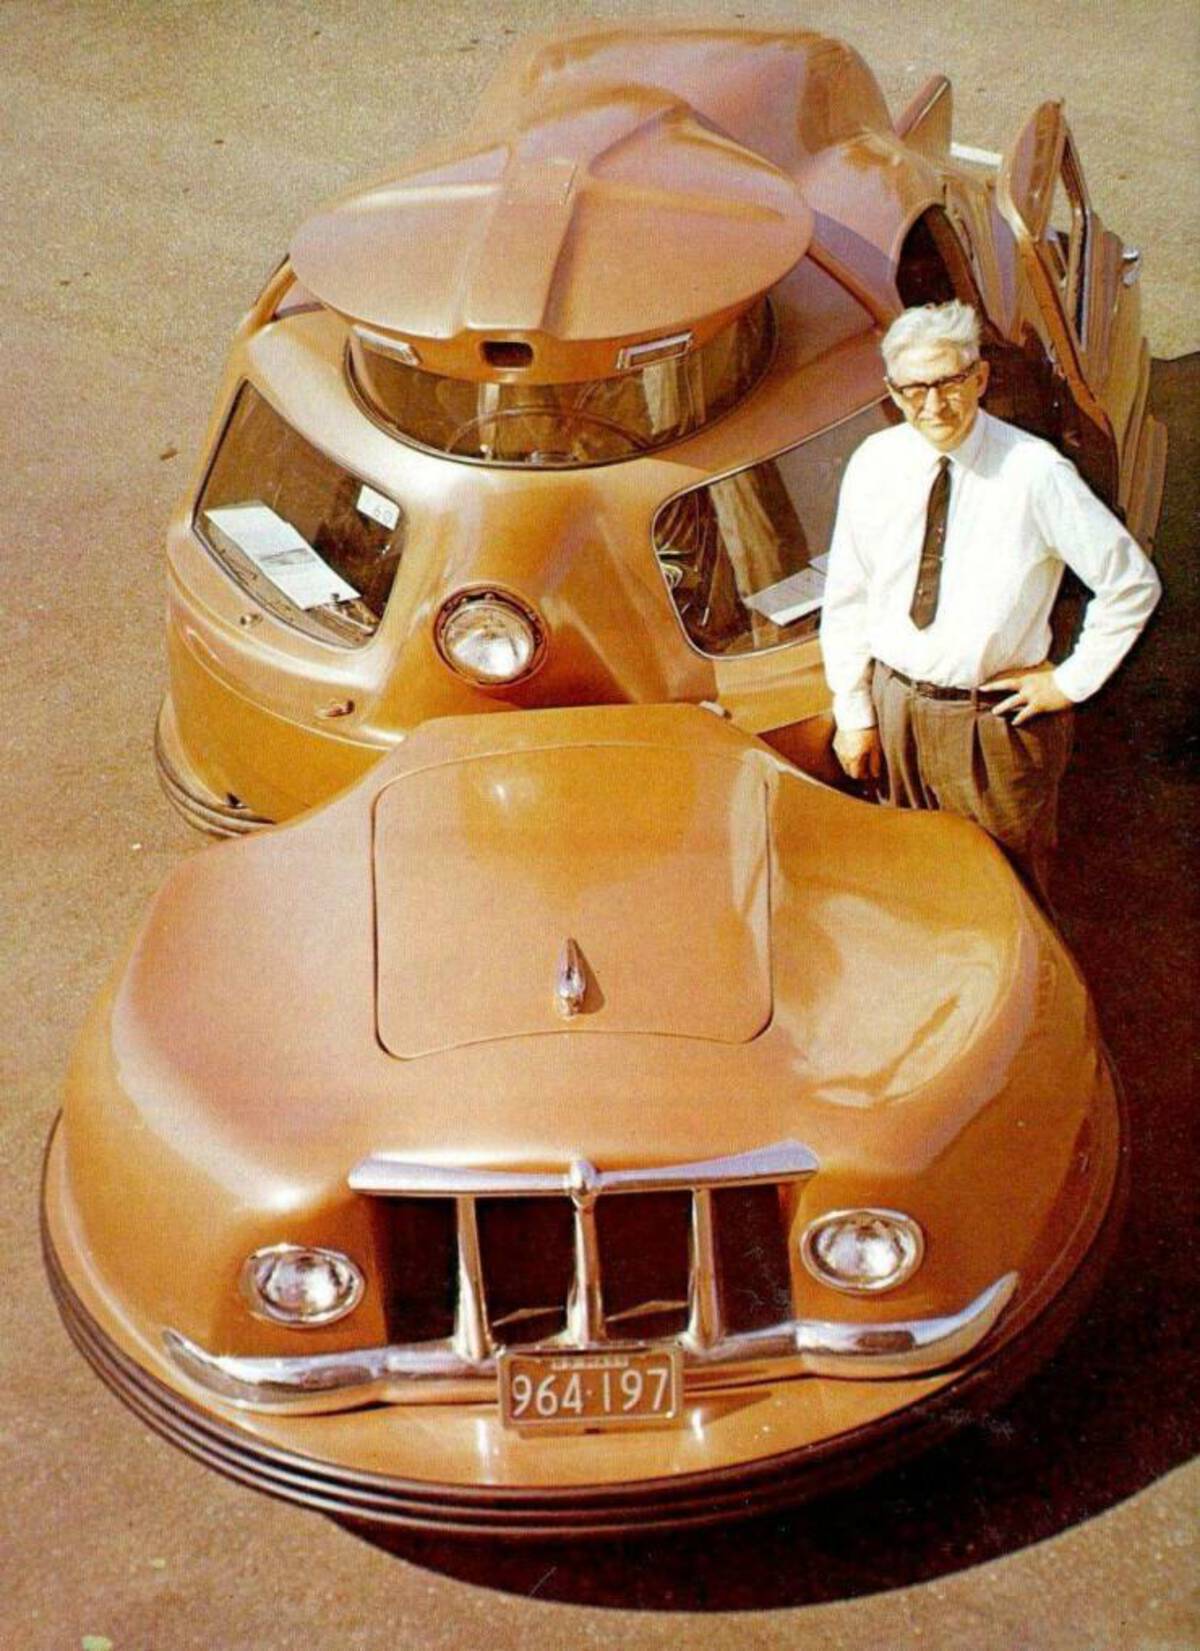 sir vival car - 964197